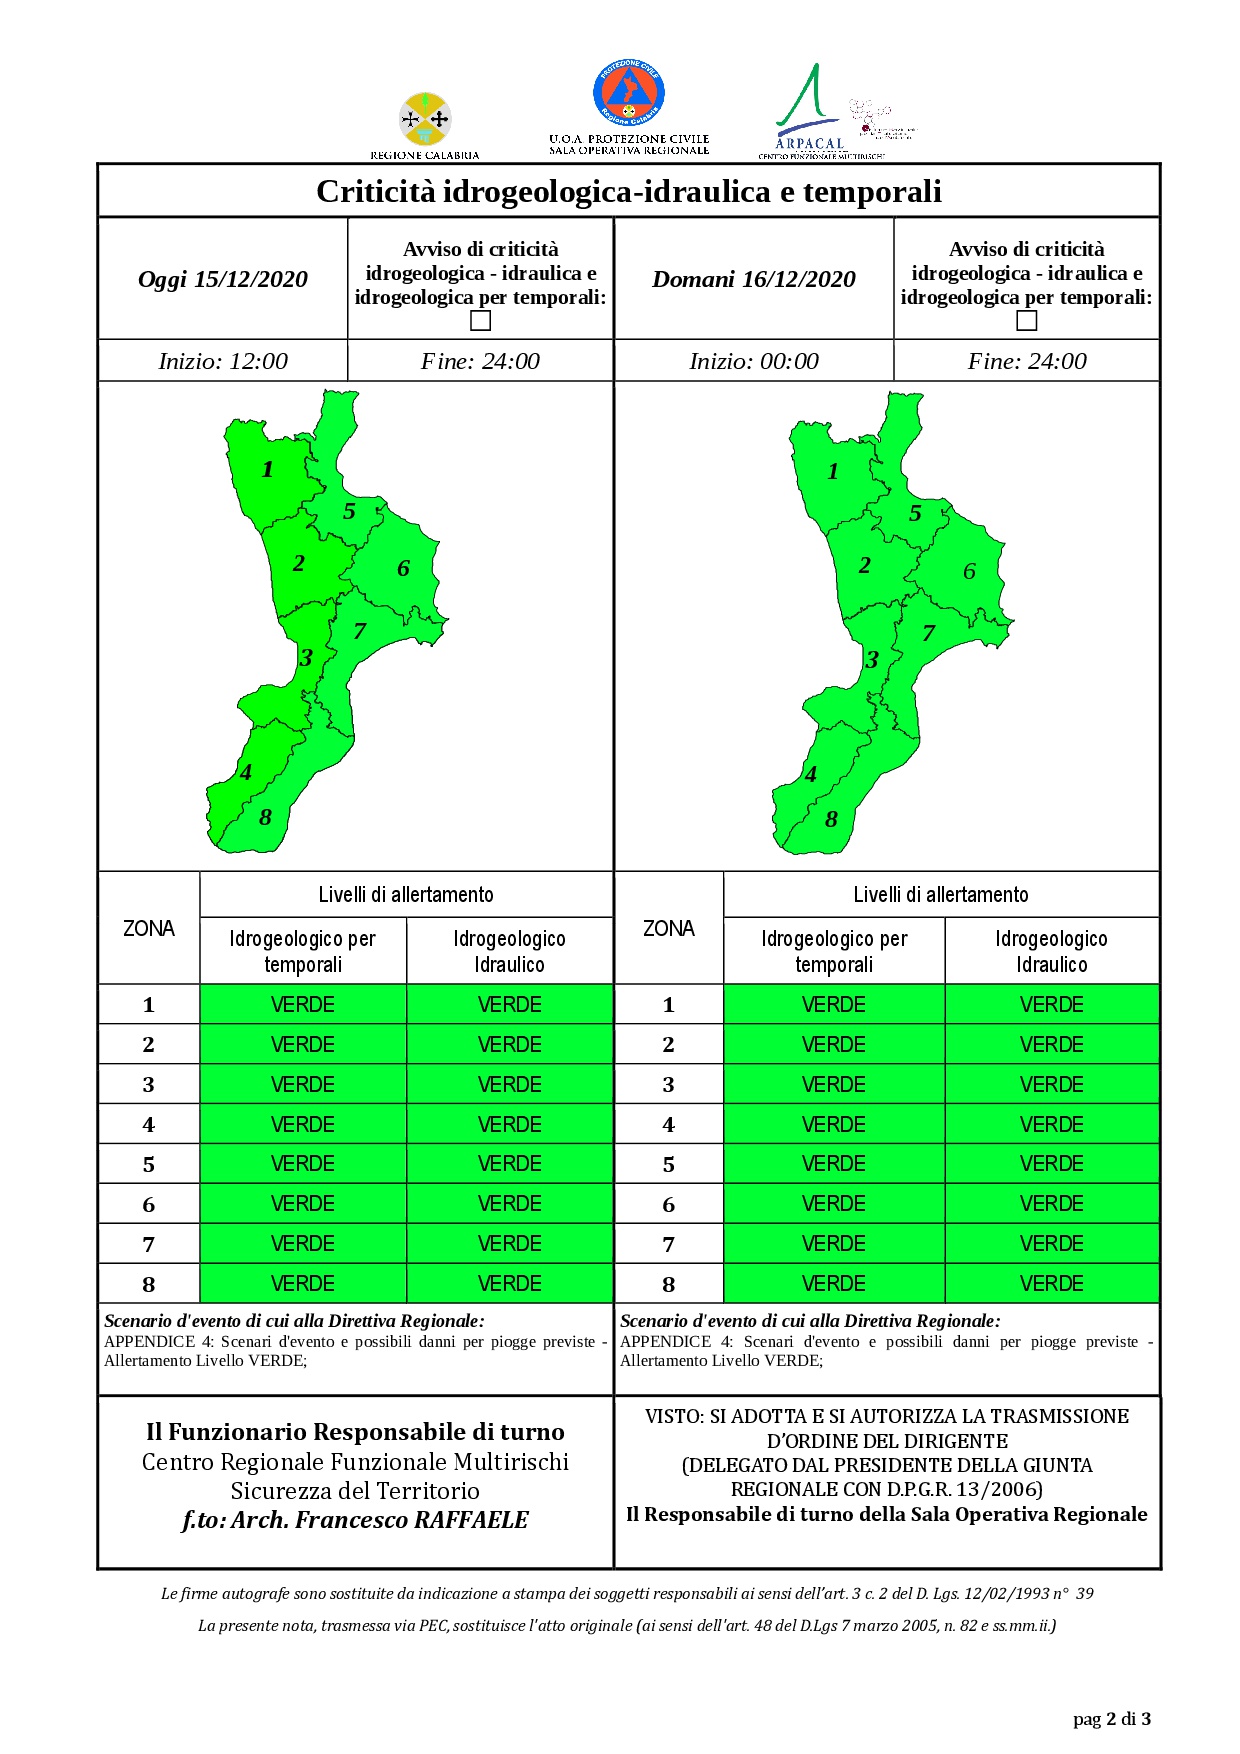 Criticità idrogeologica-idraulica e temporali in Calabria 15-12-2020